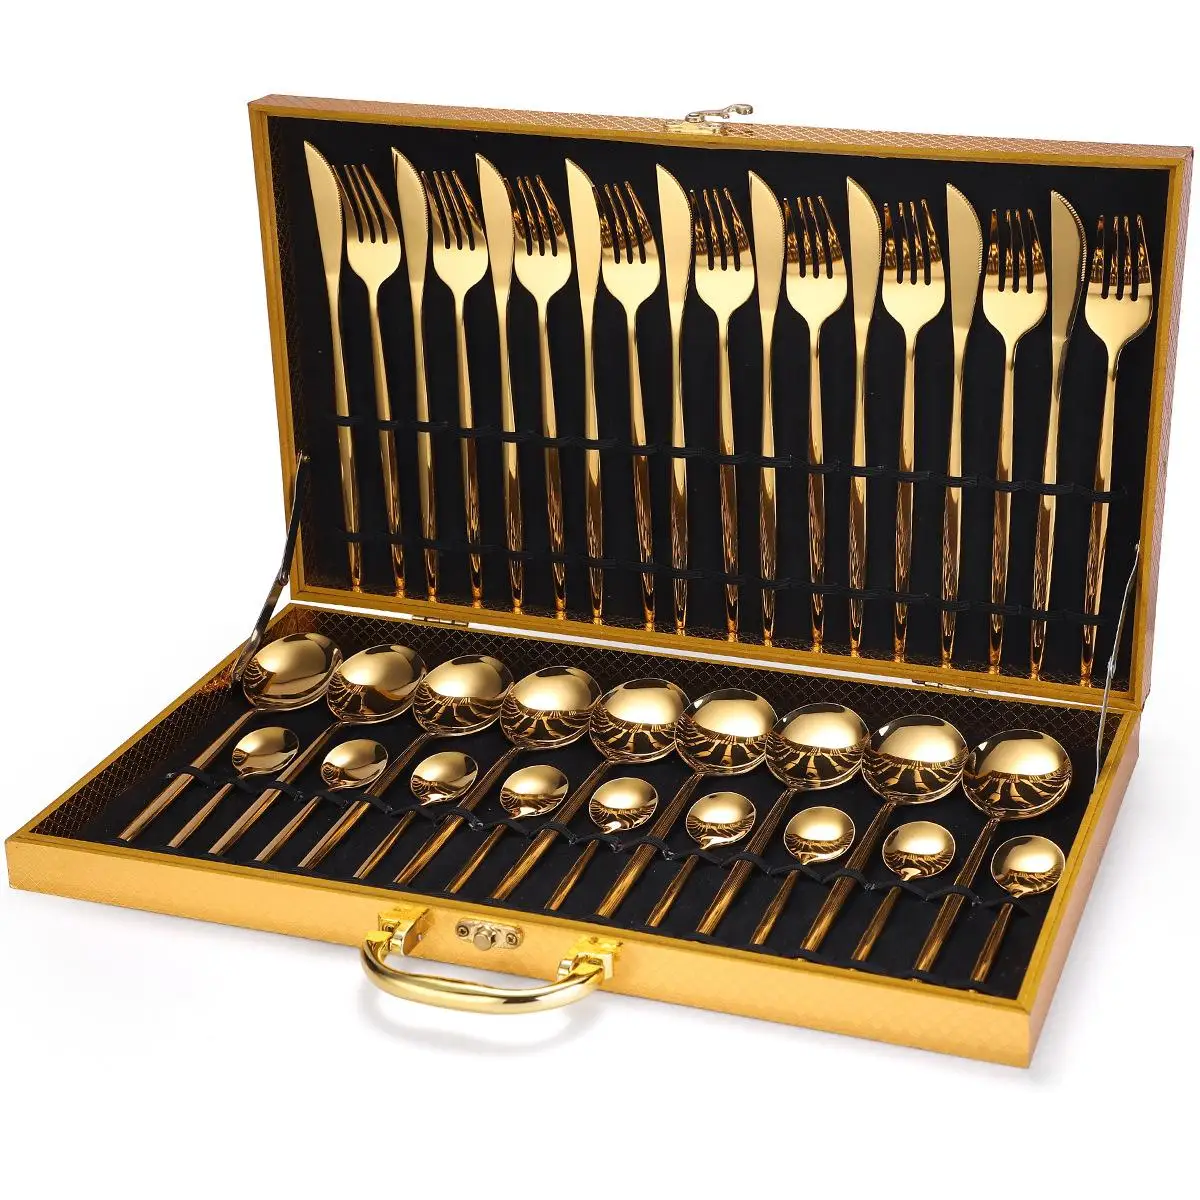 

24pcs Gold Dinnerware Set Stainless Steel Tableware Set Knife Fork Spoon Luxury Cutlery Set Gift Box Flatware Dishwasher Safe, Sliver glod black